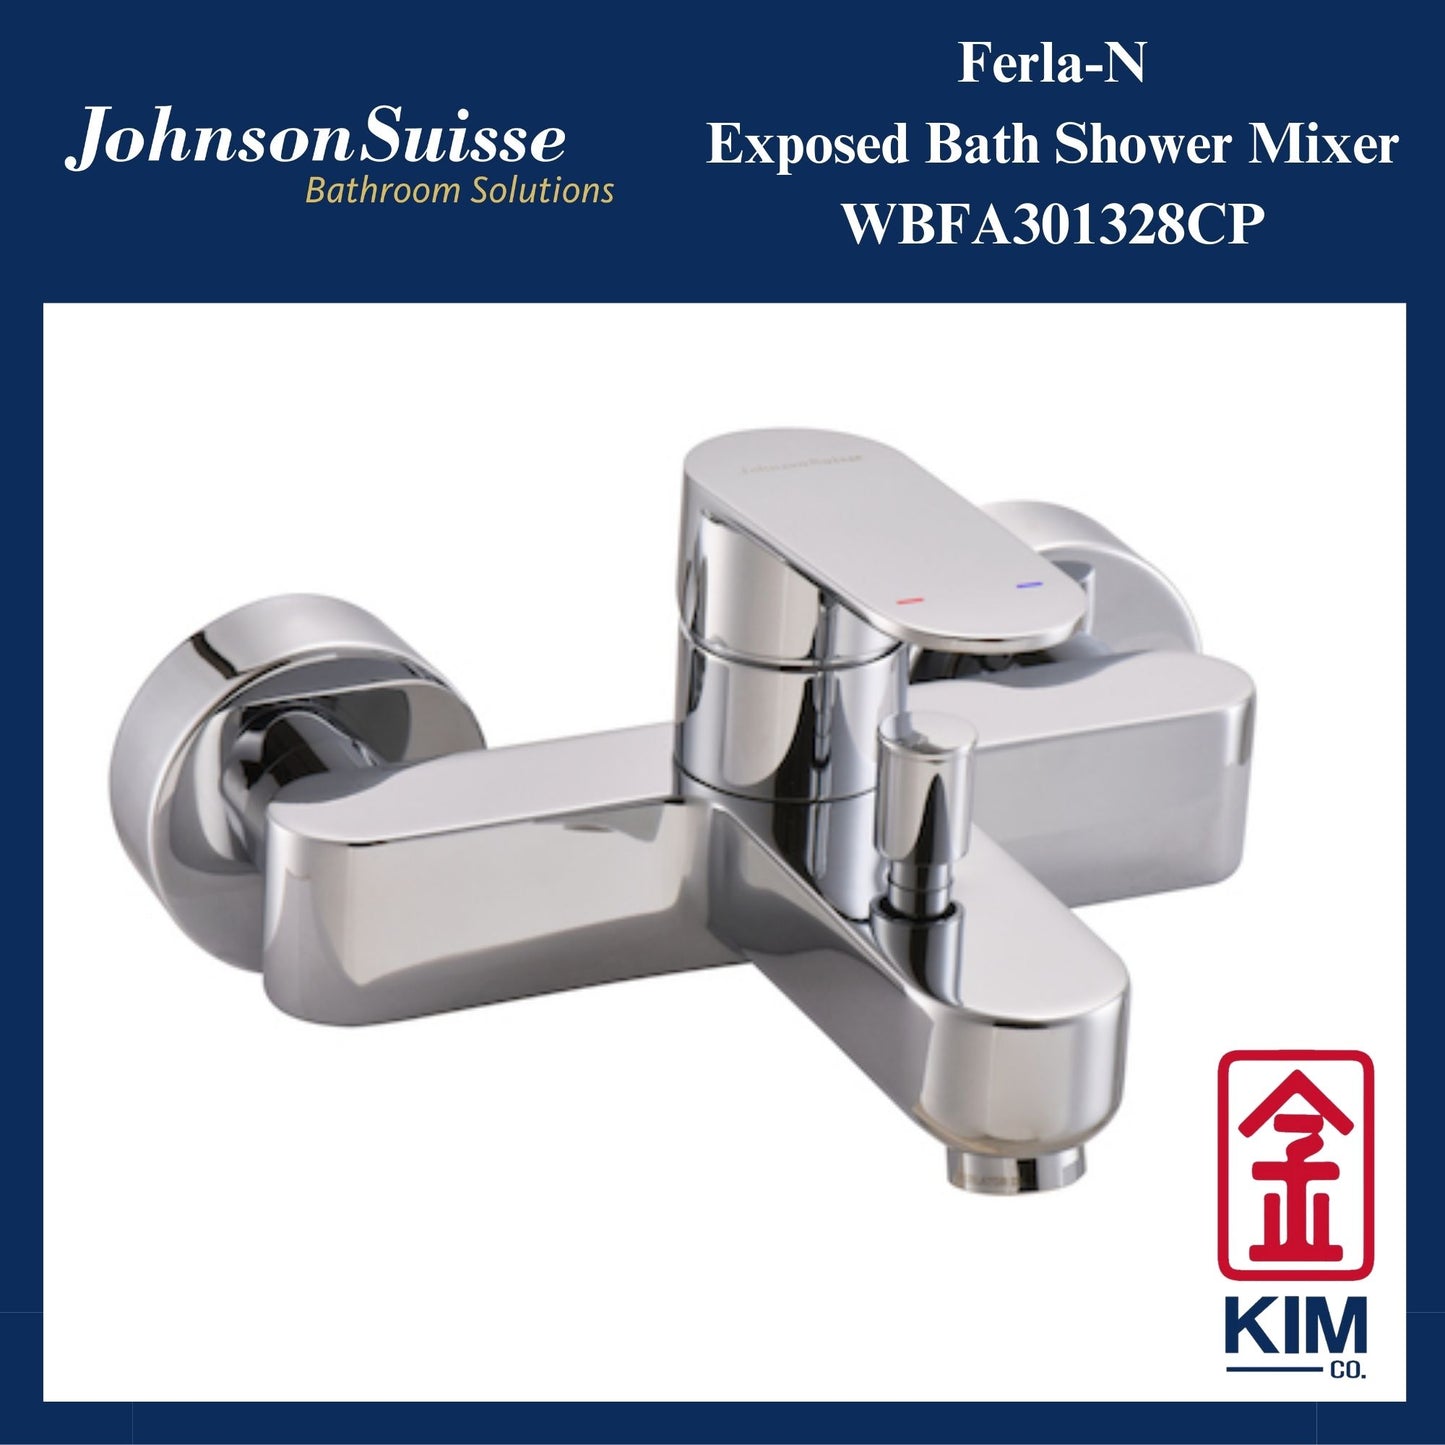 Johnson Suisse Ferla-N Exposed Bath Shower Mixer Without Shower Kit (WBFA301328CP)